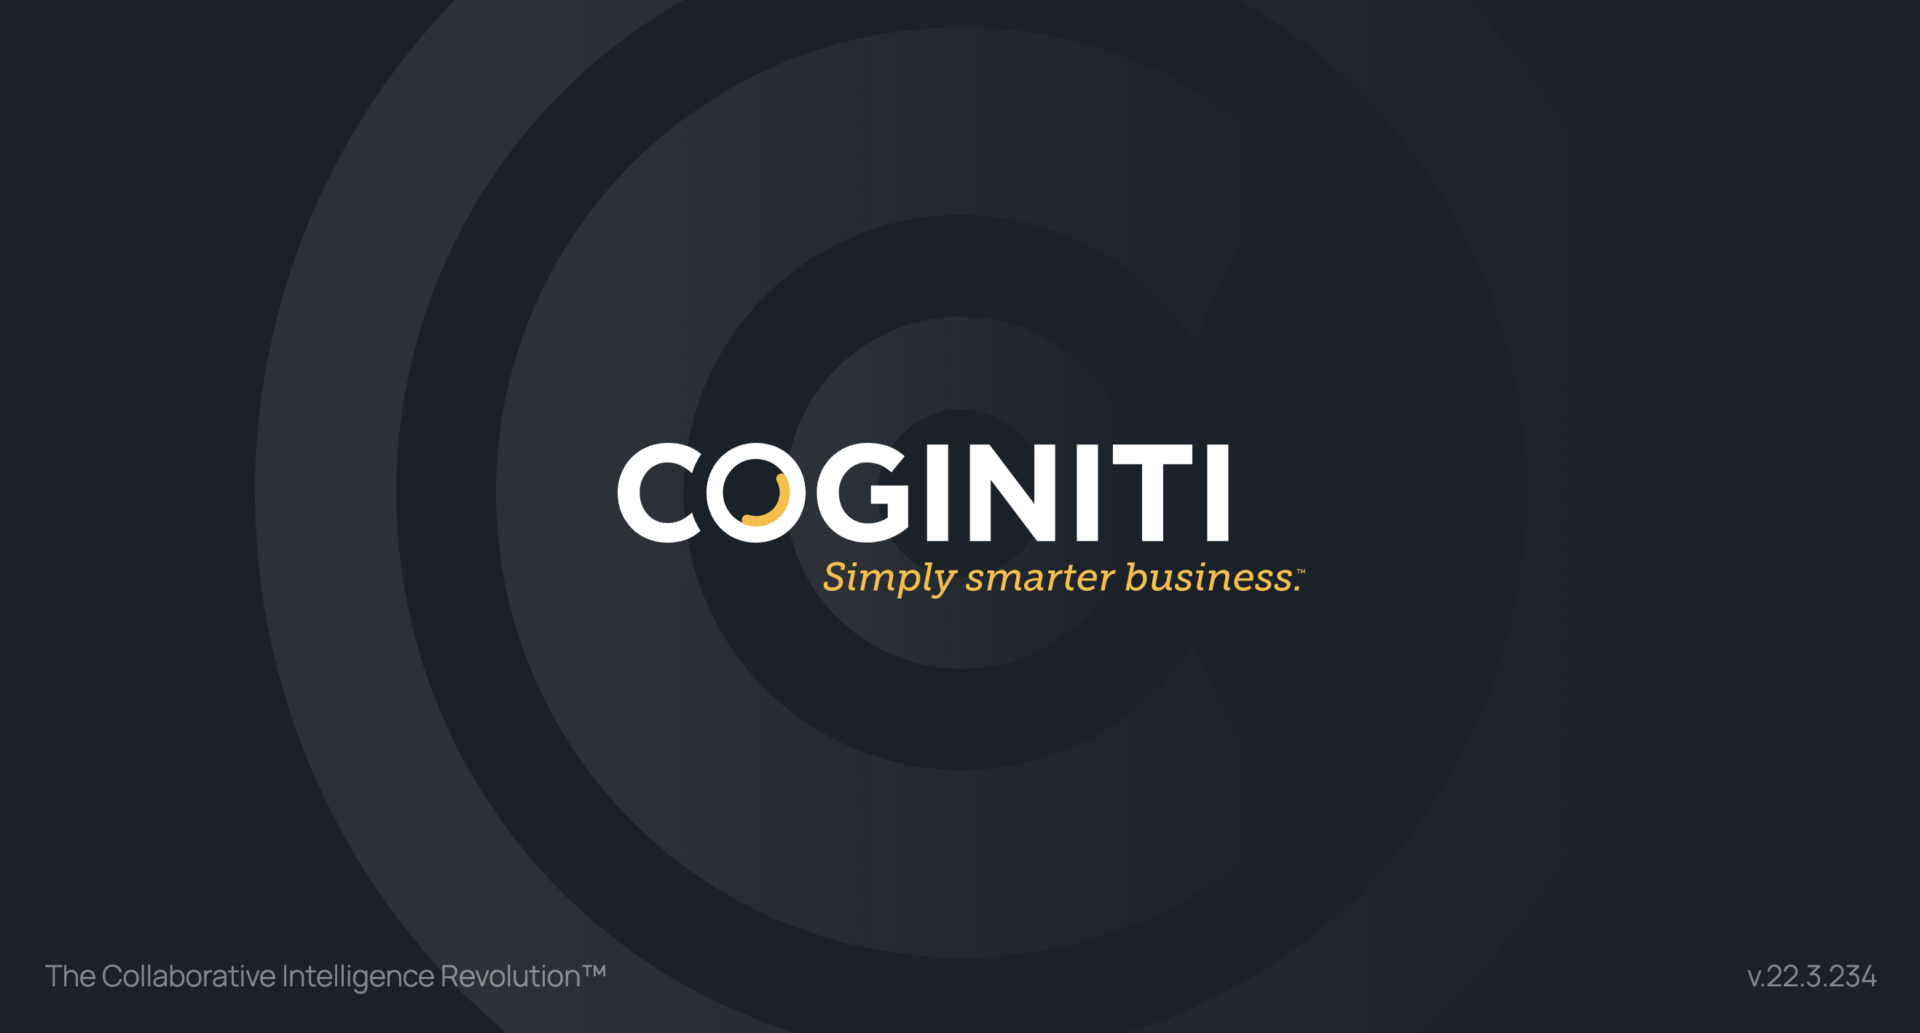 Coginiti simply smarter business